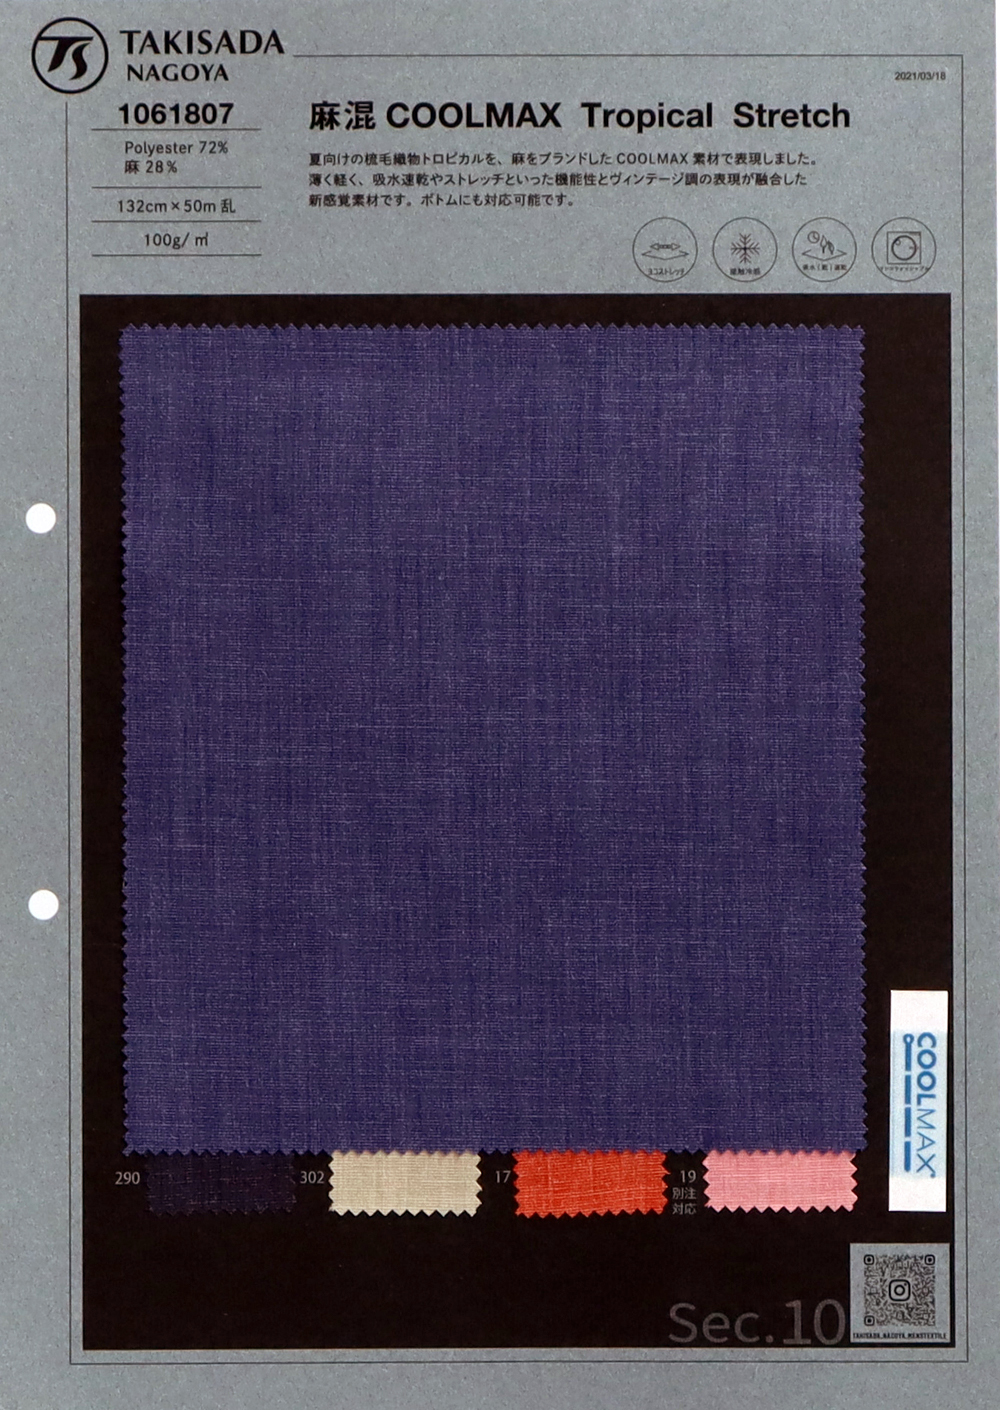 1061807 50/1 Lin Tetoron COOLMAX®[Fabrication De Textile] Takisada Nagoya